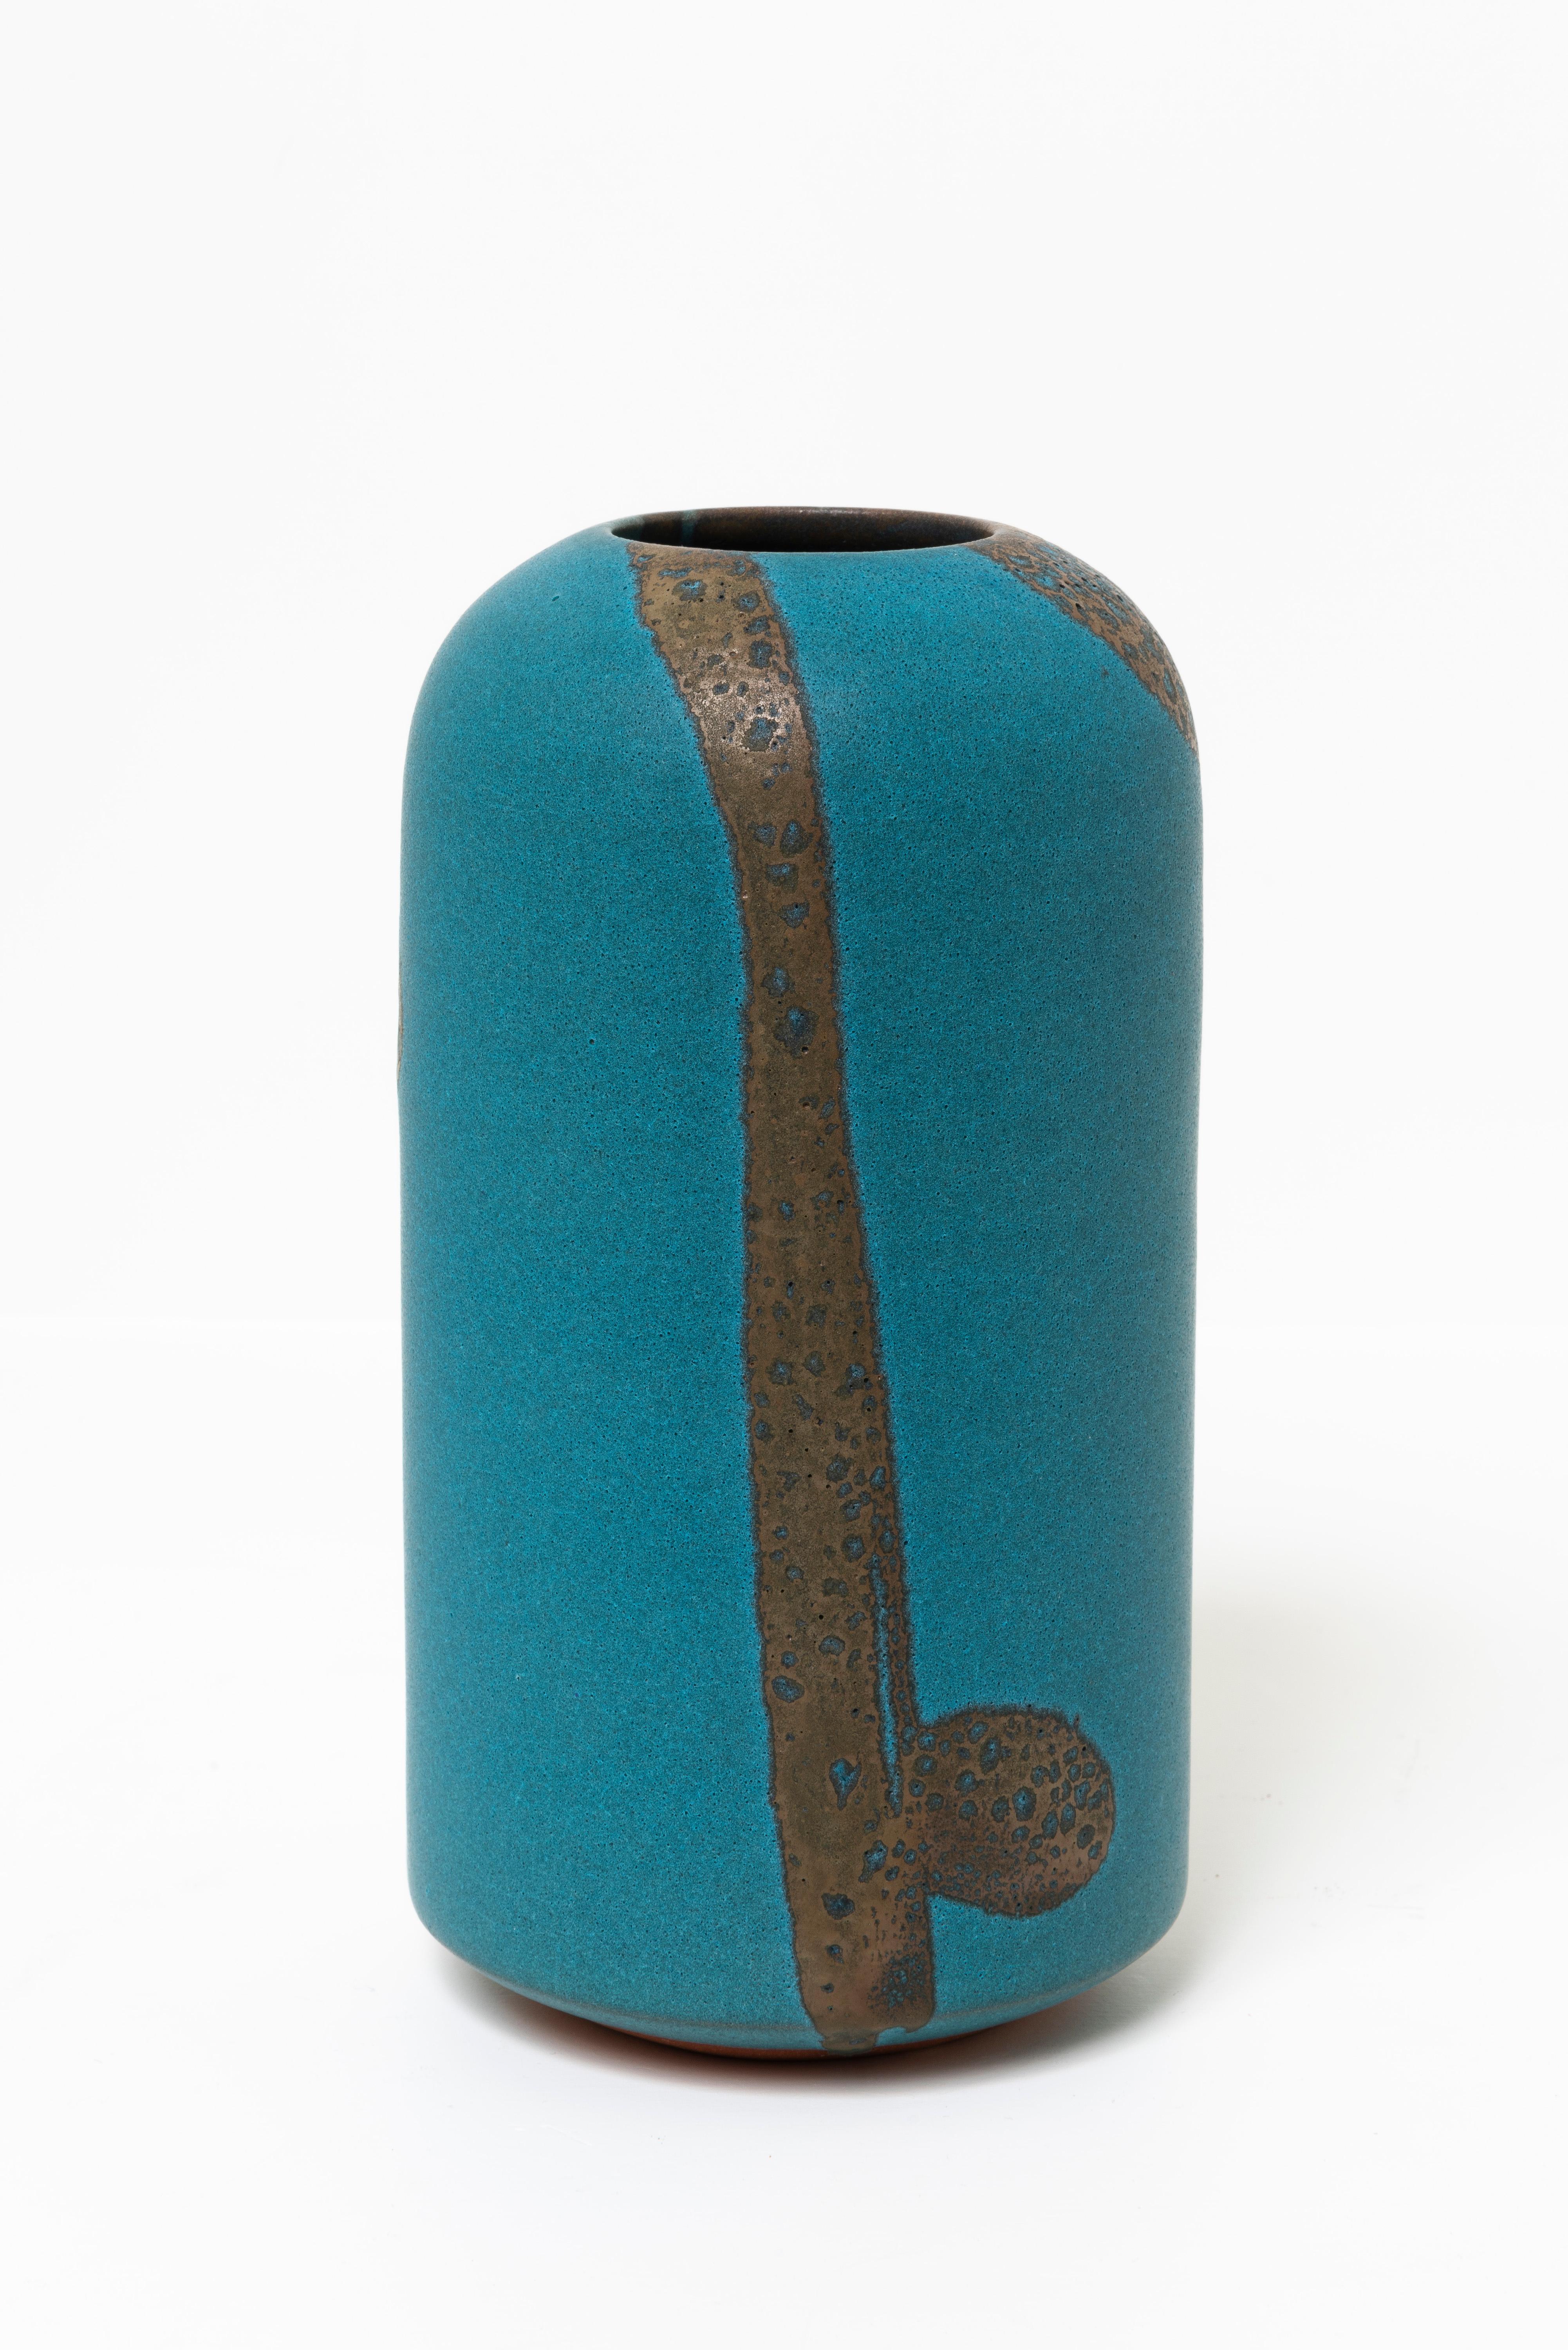 Japonisme Contemporary Japanese stoneware ceramic vase by Morino Hiroaki Taimei For Sale